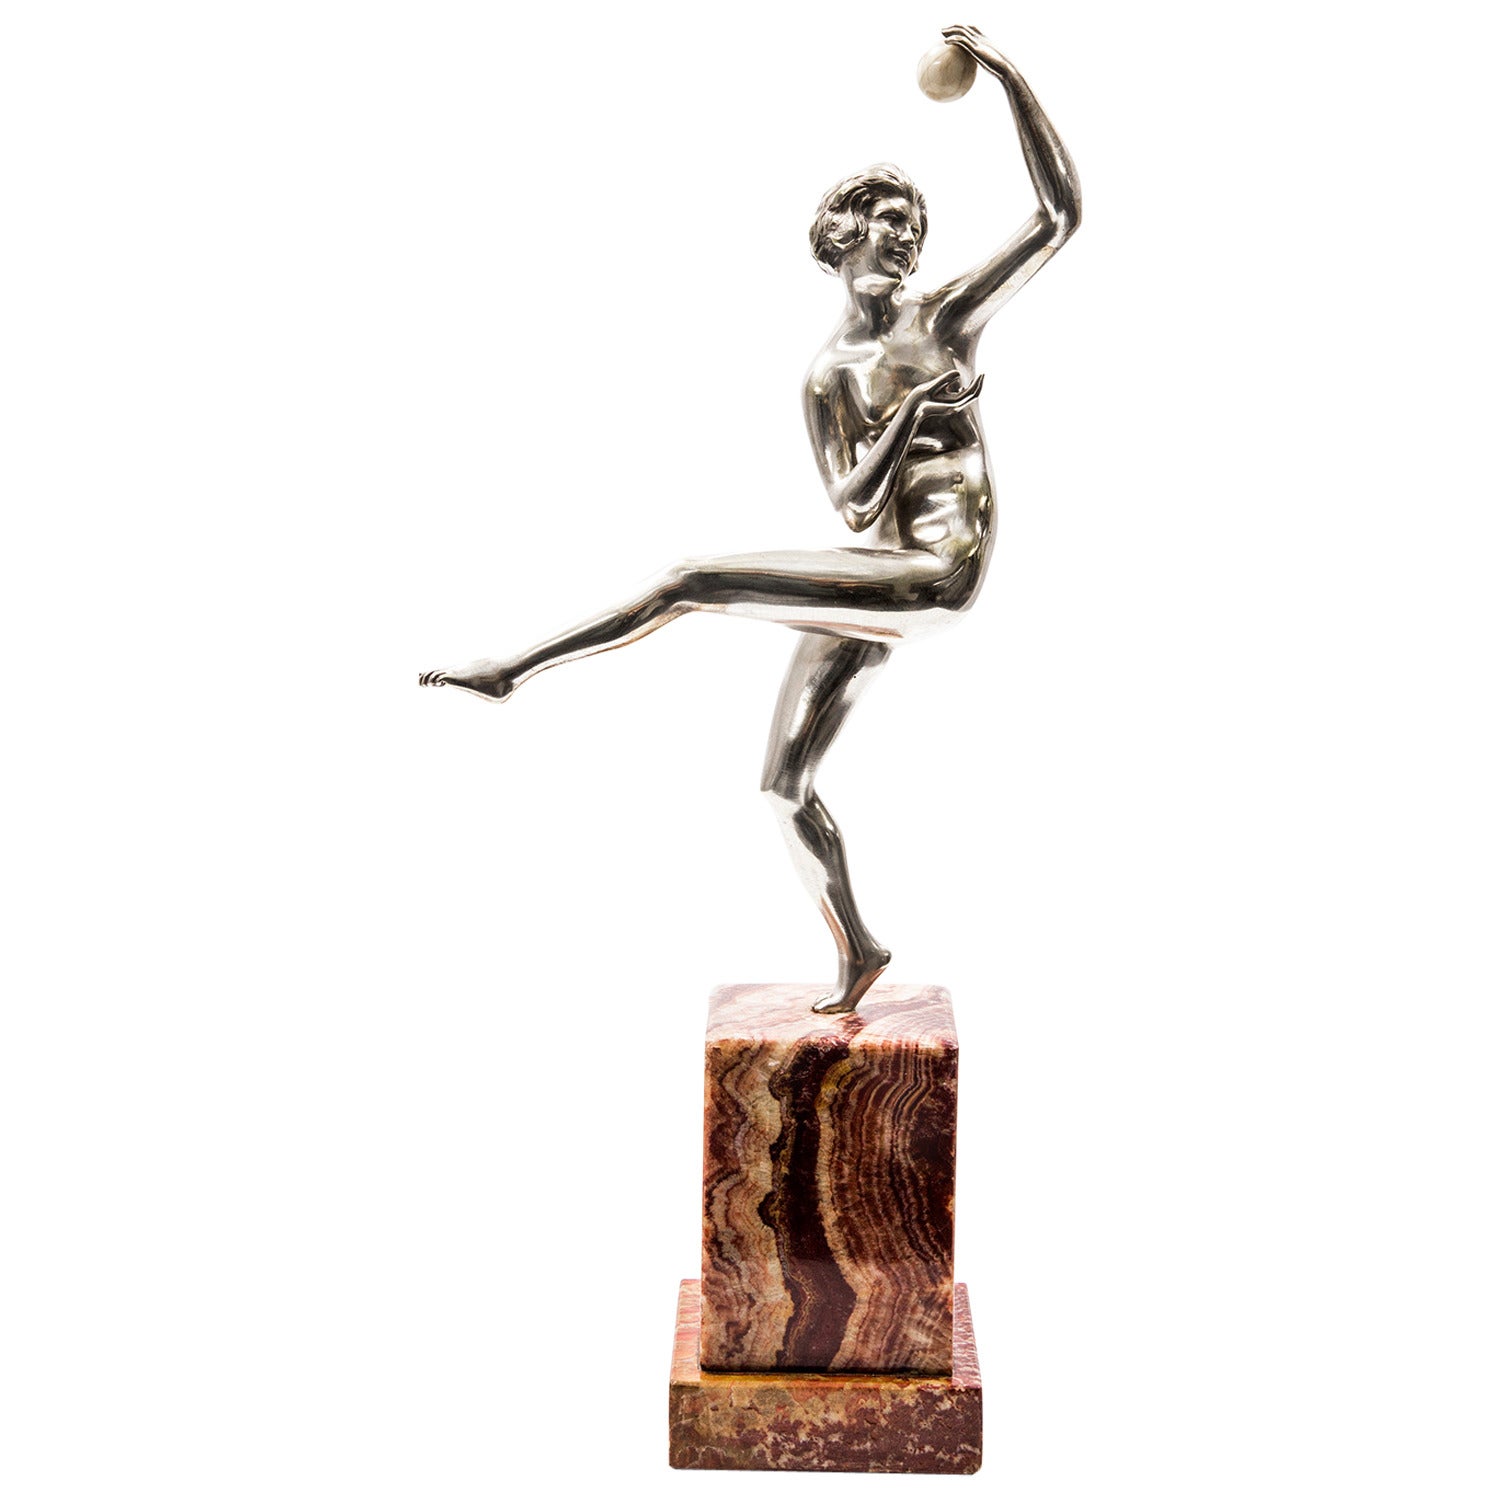 Art Deco Silvered Bronze Sculpture Nude Dancer Guiraud-Riviere, circa 1925